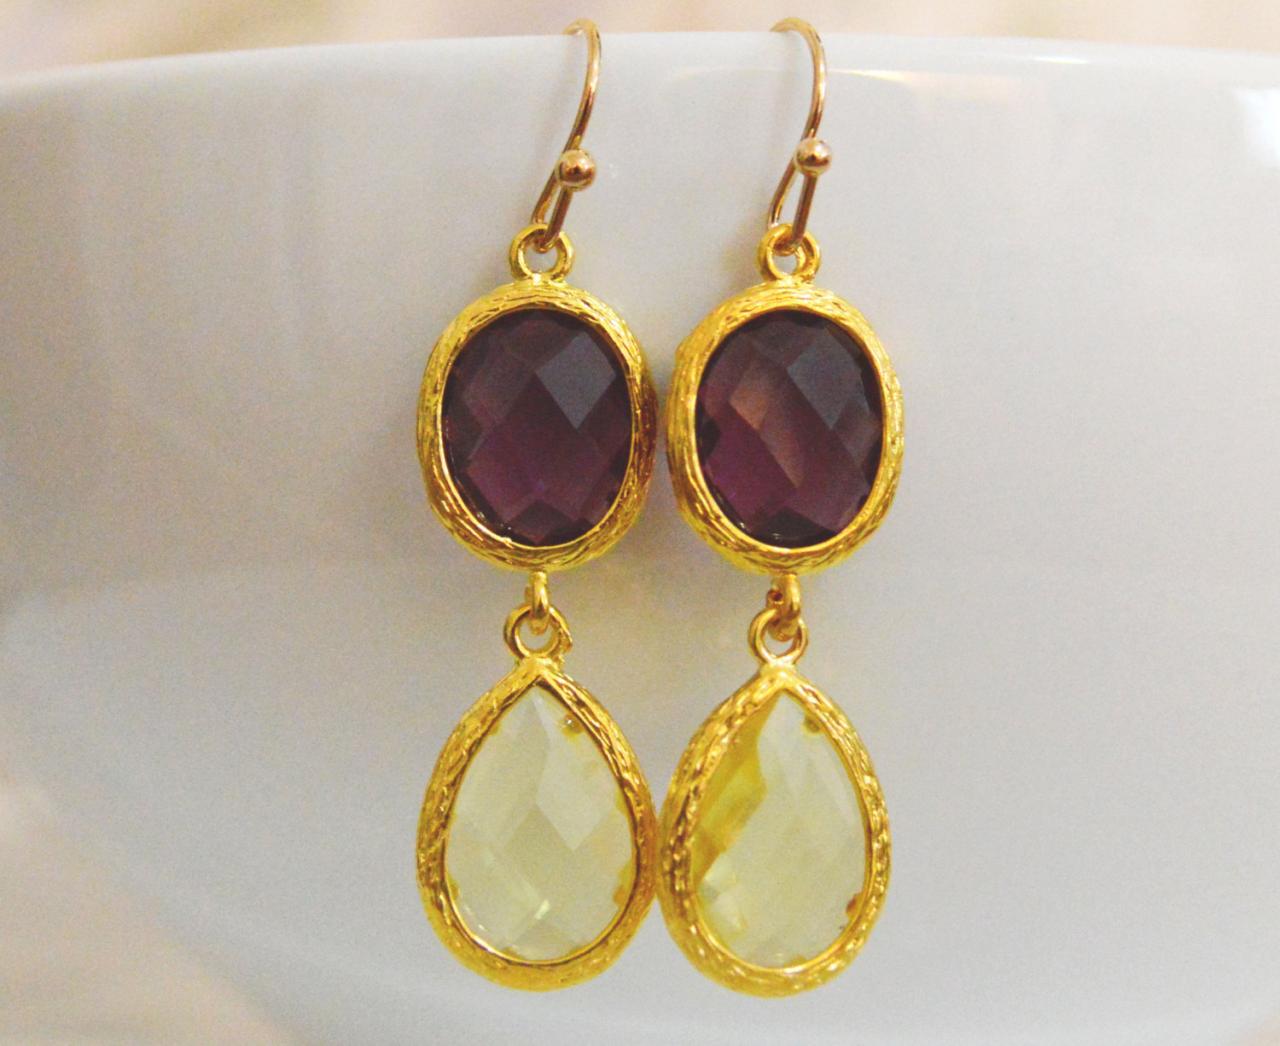 ) B-028 Glass Earrings, Amethyst&lemon Yellow Drop Earrings, Dangle Earrings, Gold Plated Earrings/bridesmaid Gifts/everyday Jewelry/